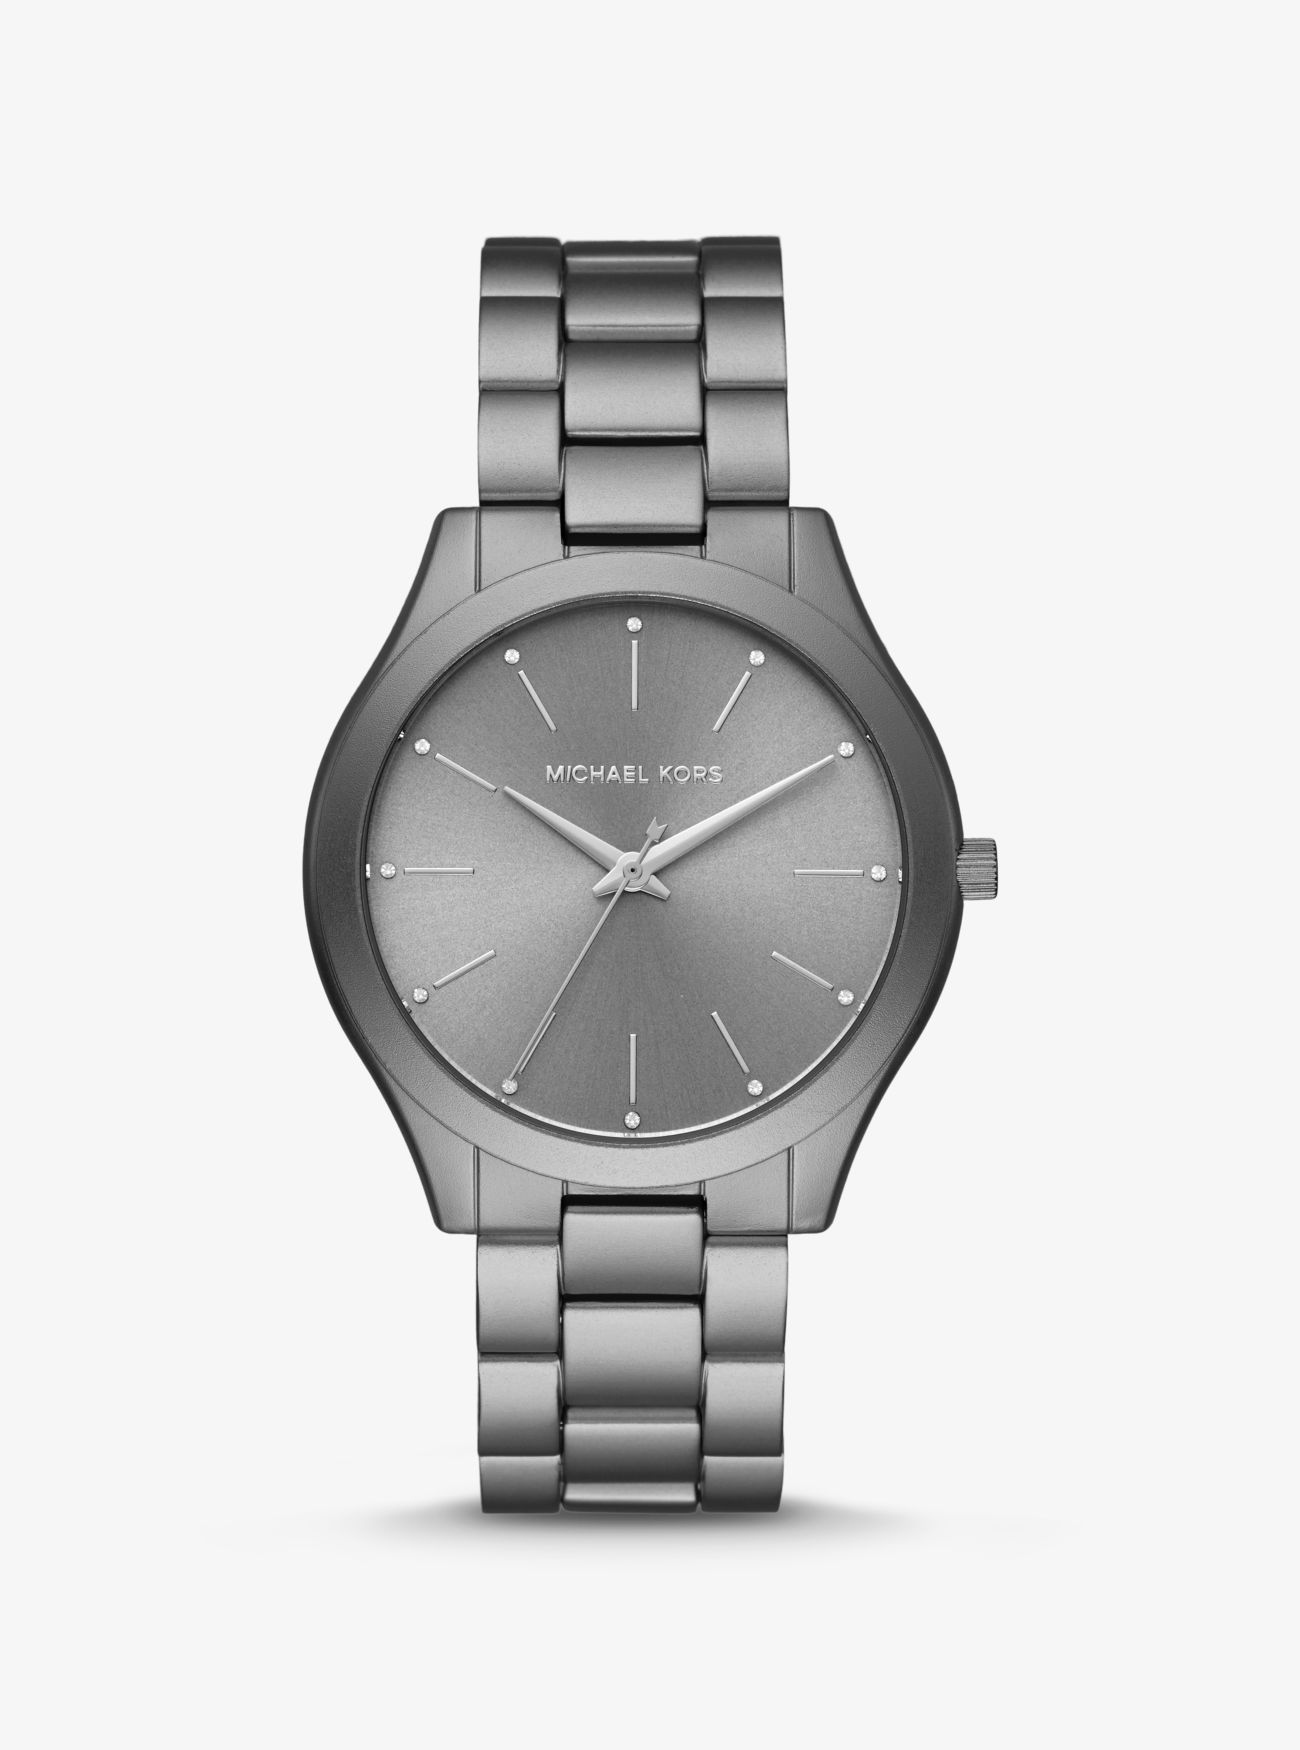 MICHAEL KORS Slim Runway Grey-Tone Aluminum Watch